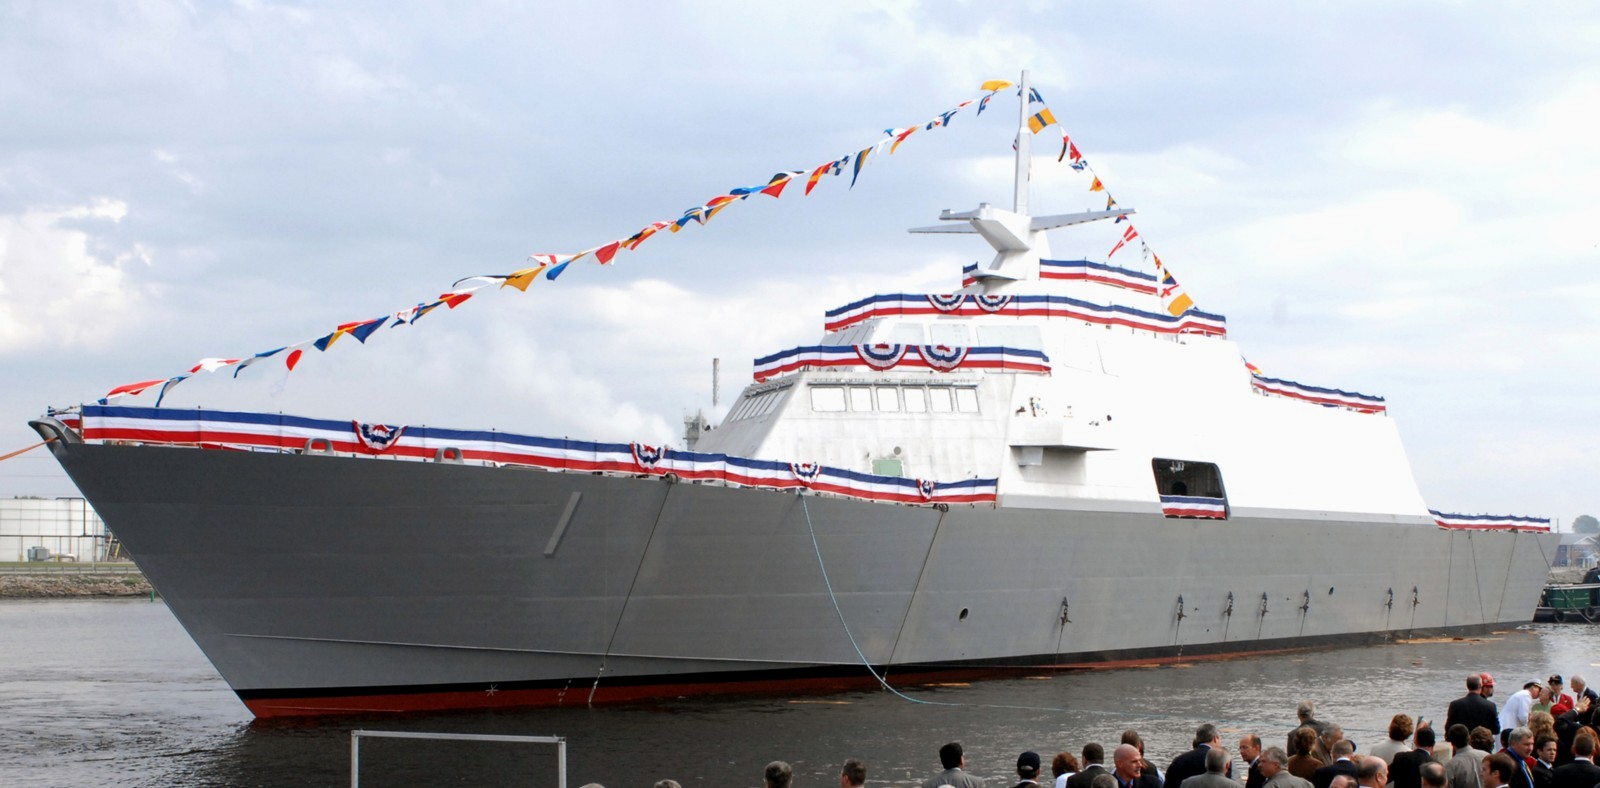 lcs-1 uss freedom class littoral combat ship us navy 150 launching marinette marine wisconsin